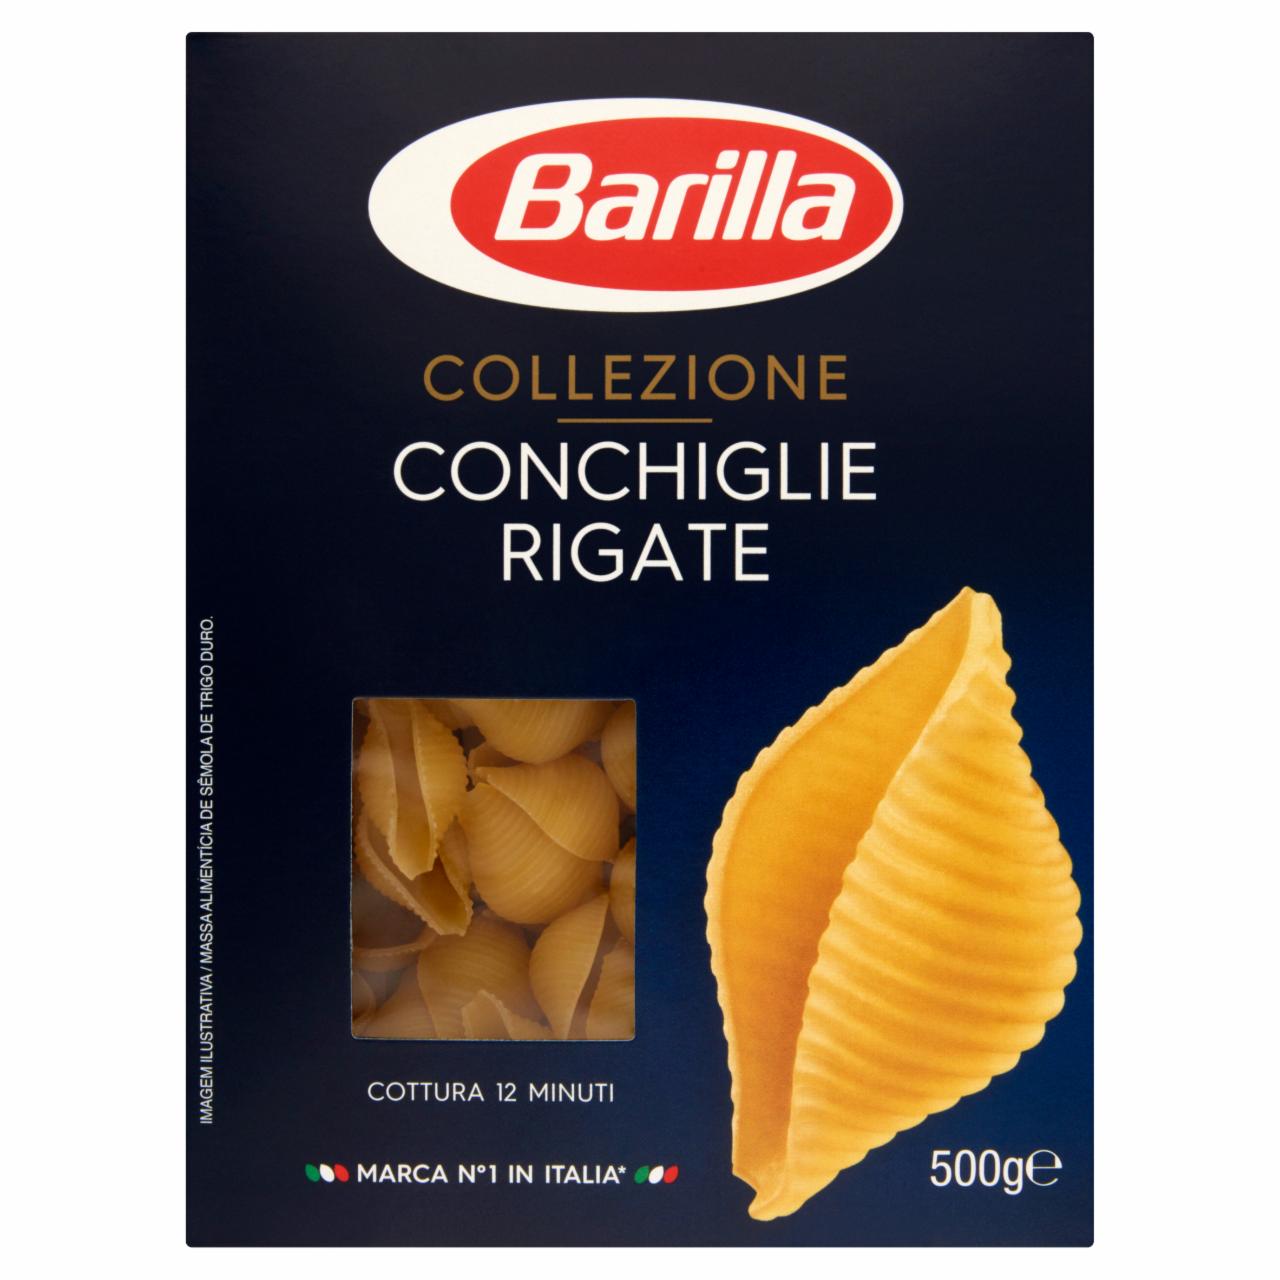 Képek - Barilla Collezione Conchiglie Rigate apró durum száraztészta 500 g